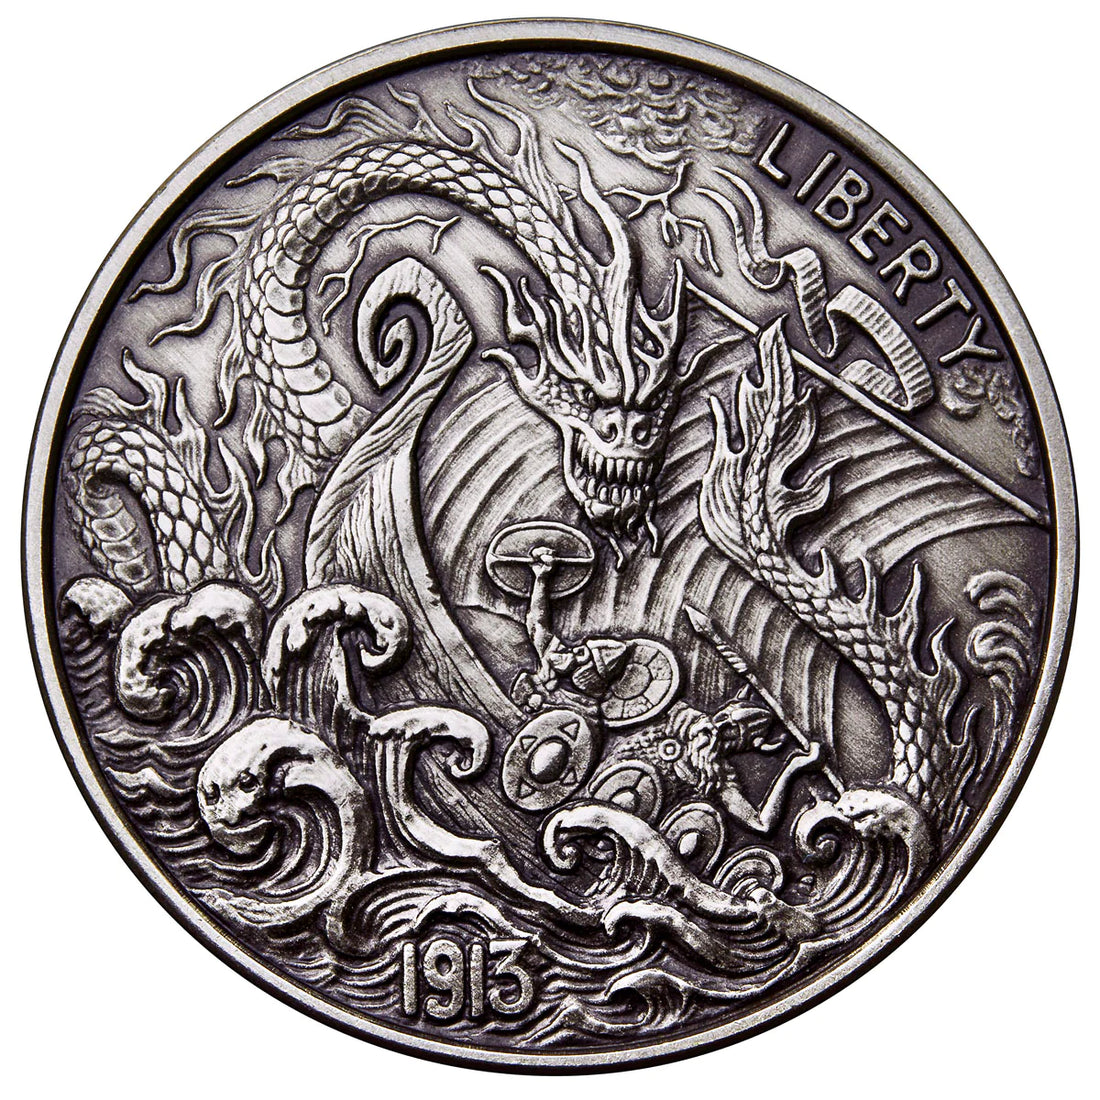 2017 1 oz VIKING BERSERKER Silver Coin (Antique) - OZB